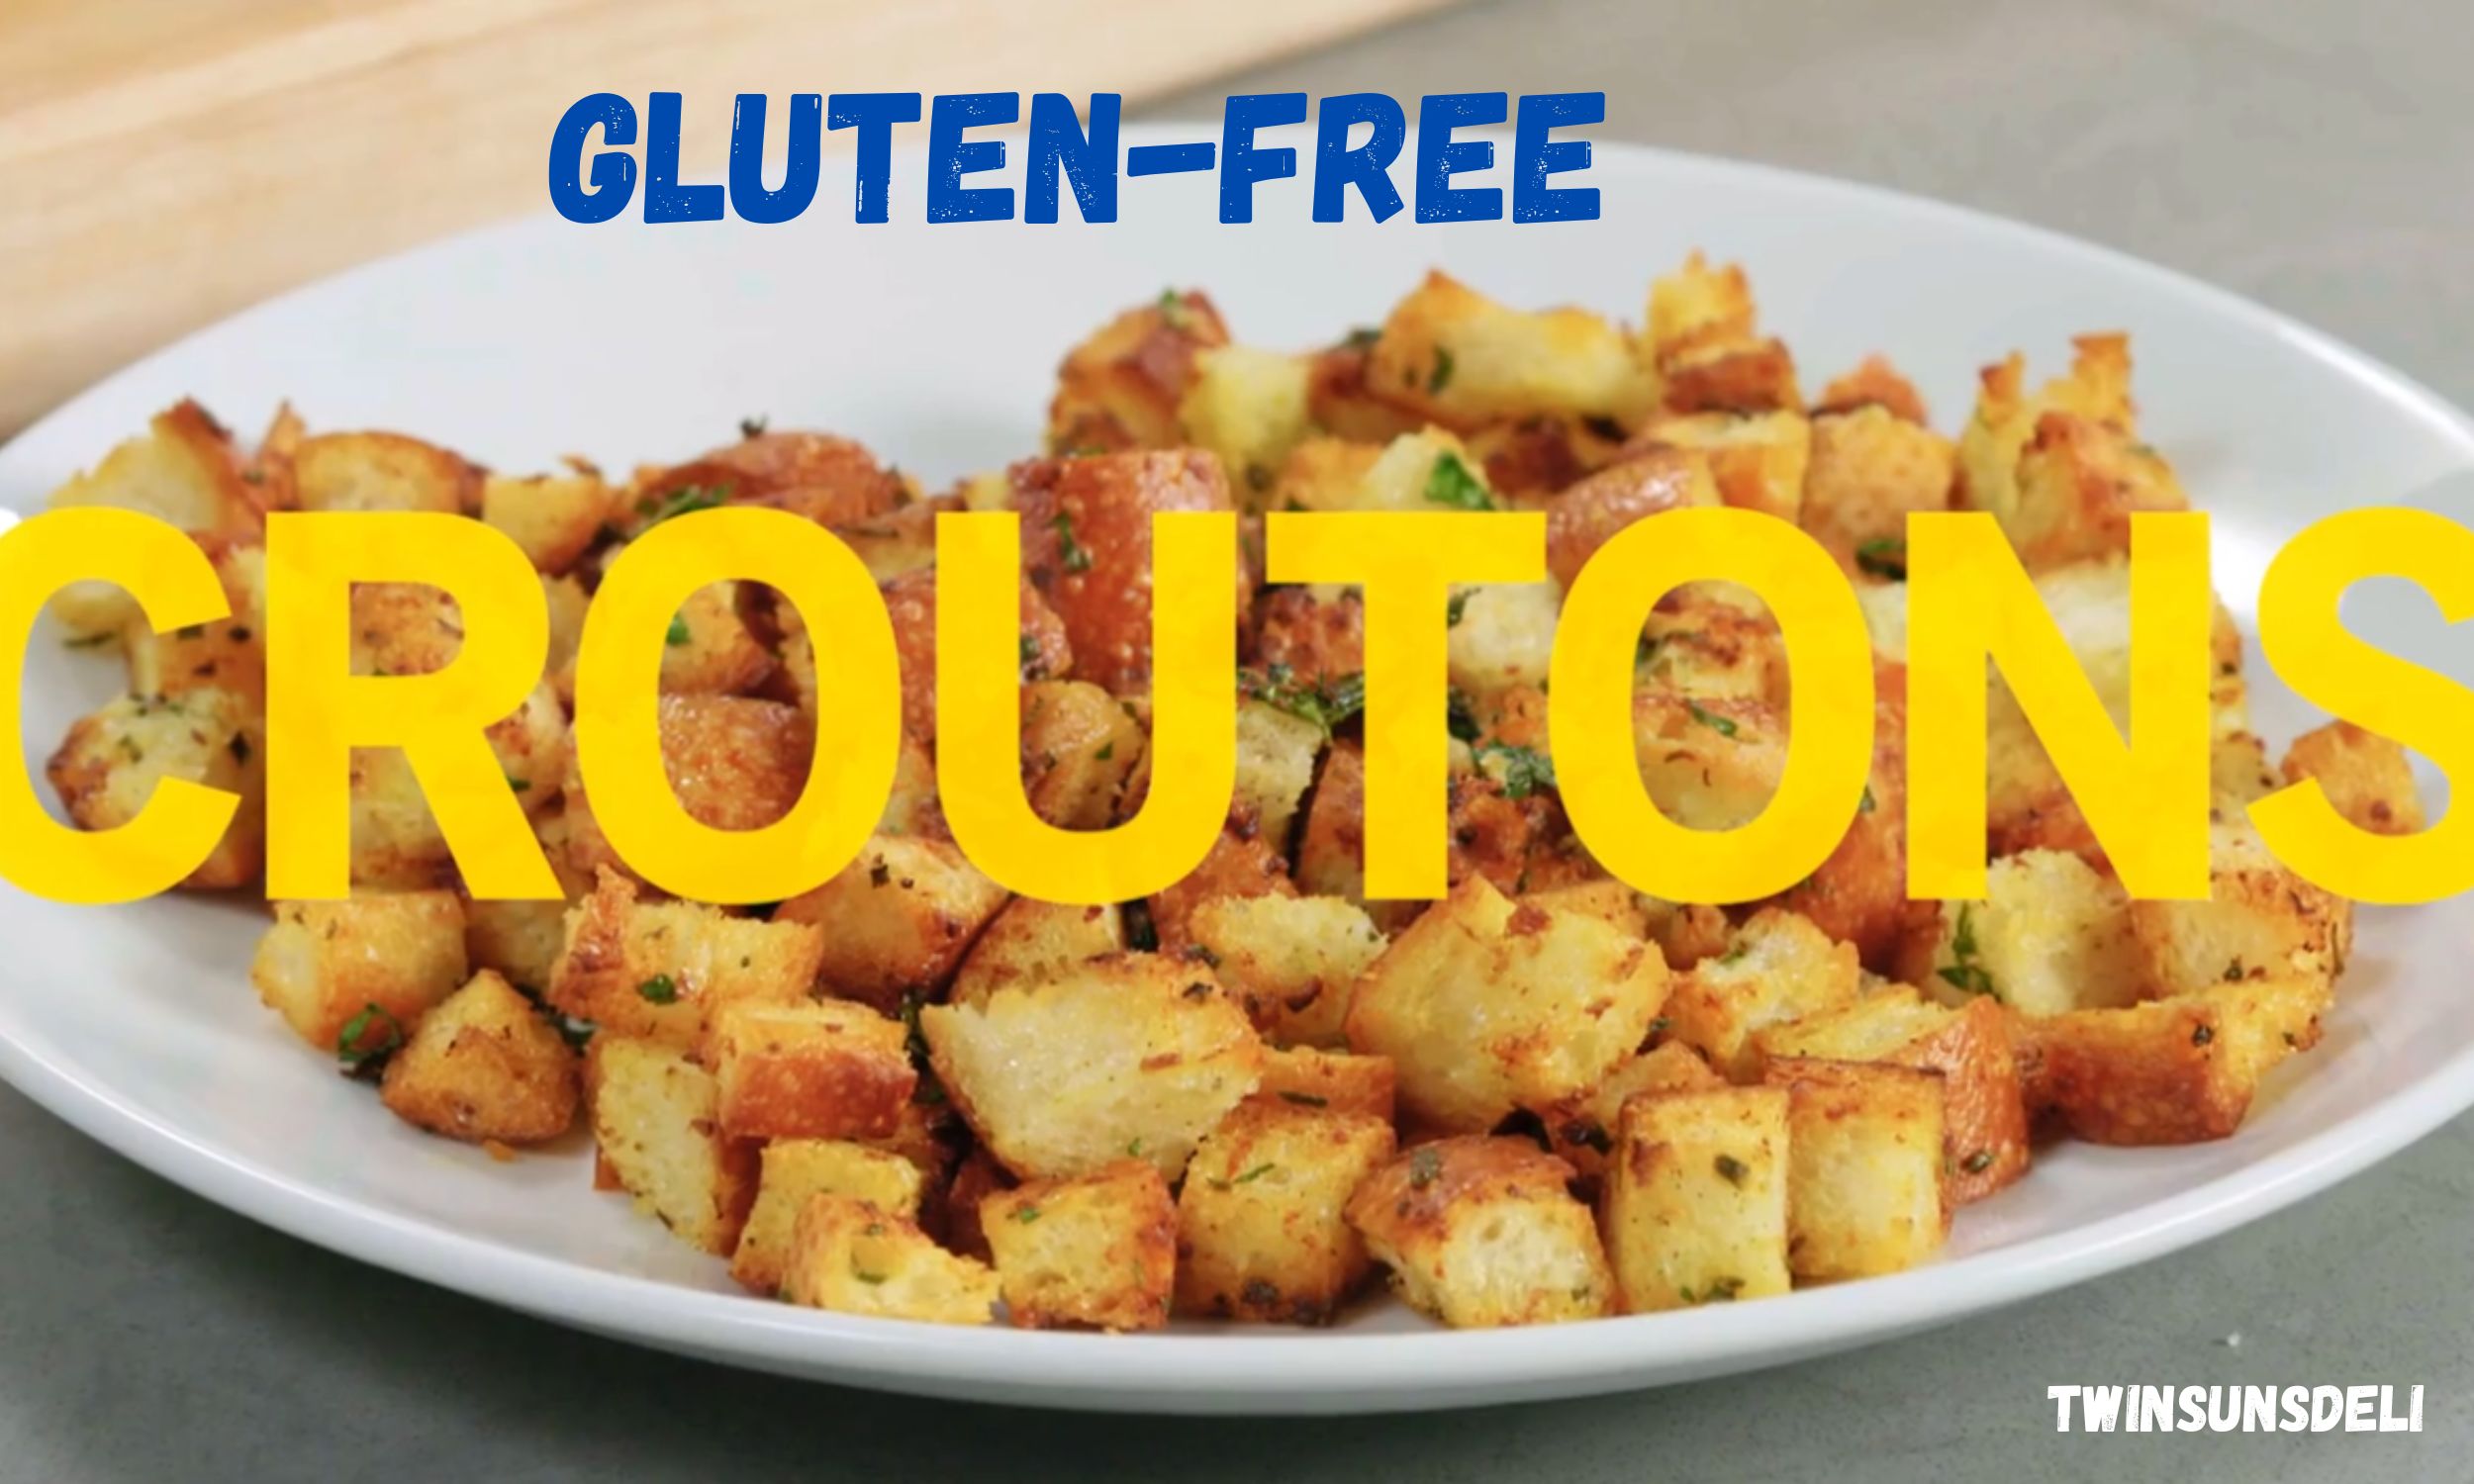 Gluten-free croutons recipe